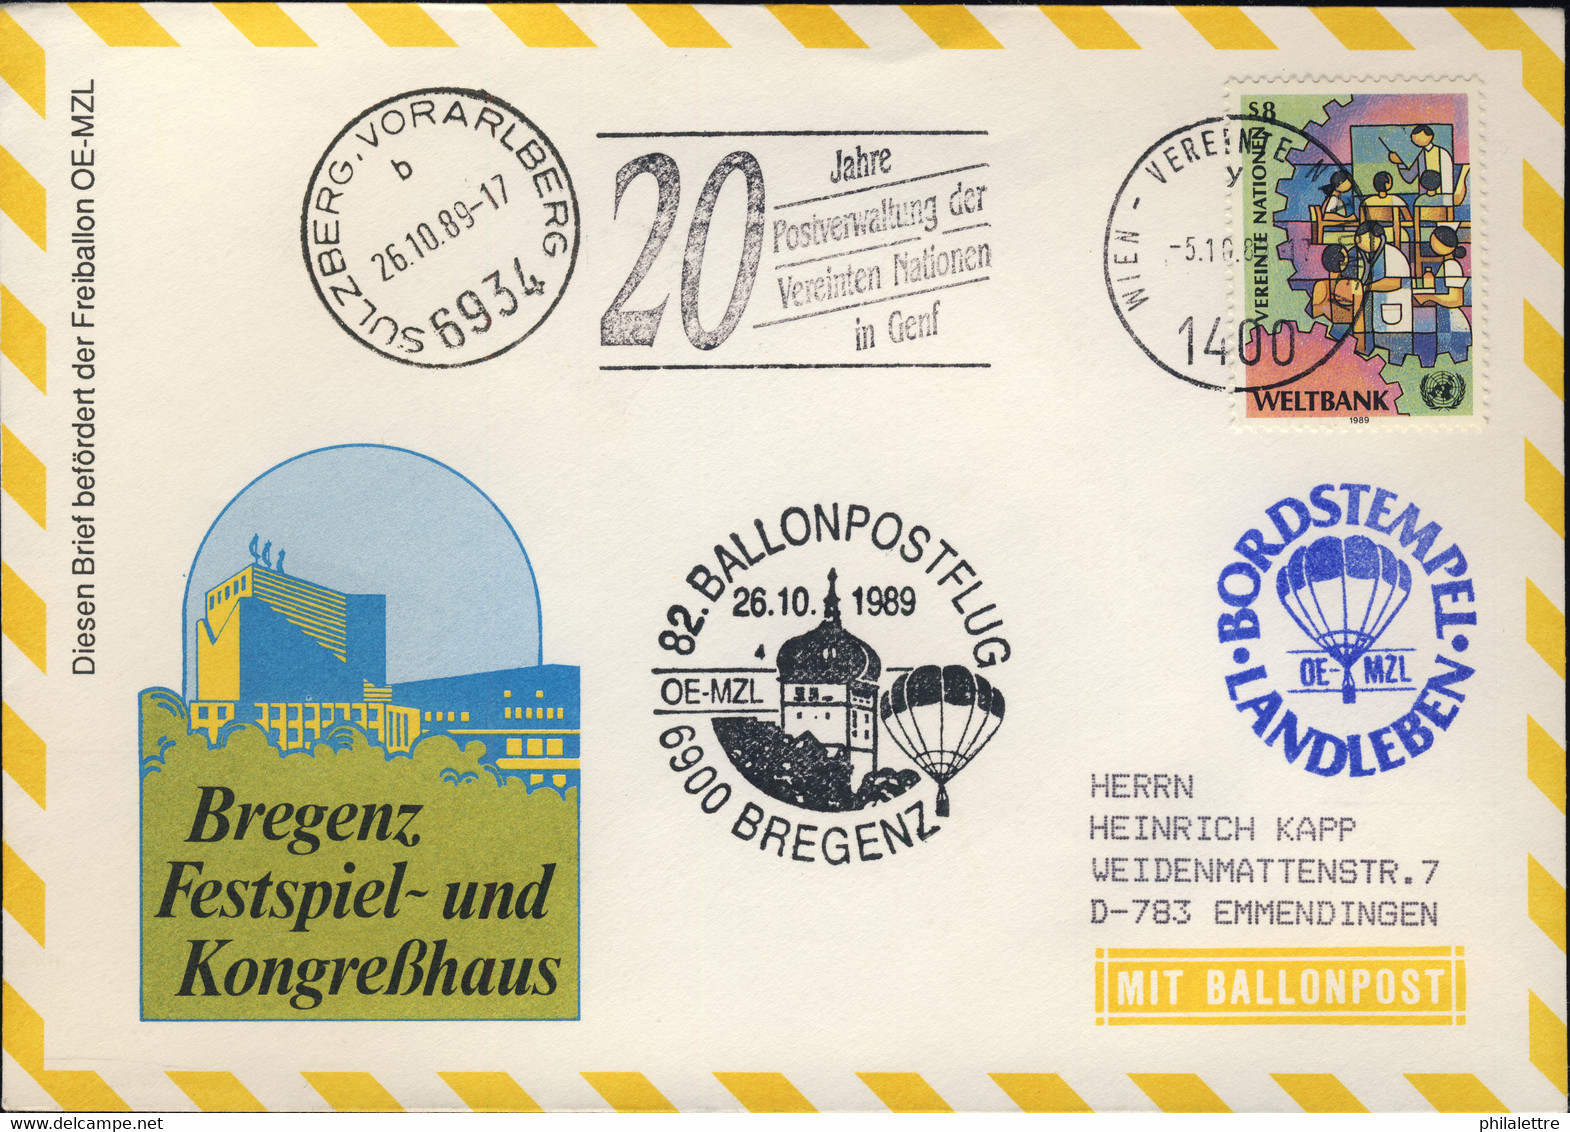 AUTRICHE / AUSTRIA / United Nations VIENNA 1989 82nd Balloon Post Flight Cover - Ballonpost